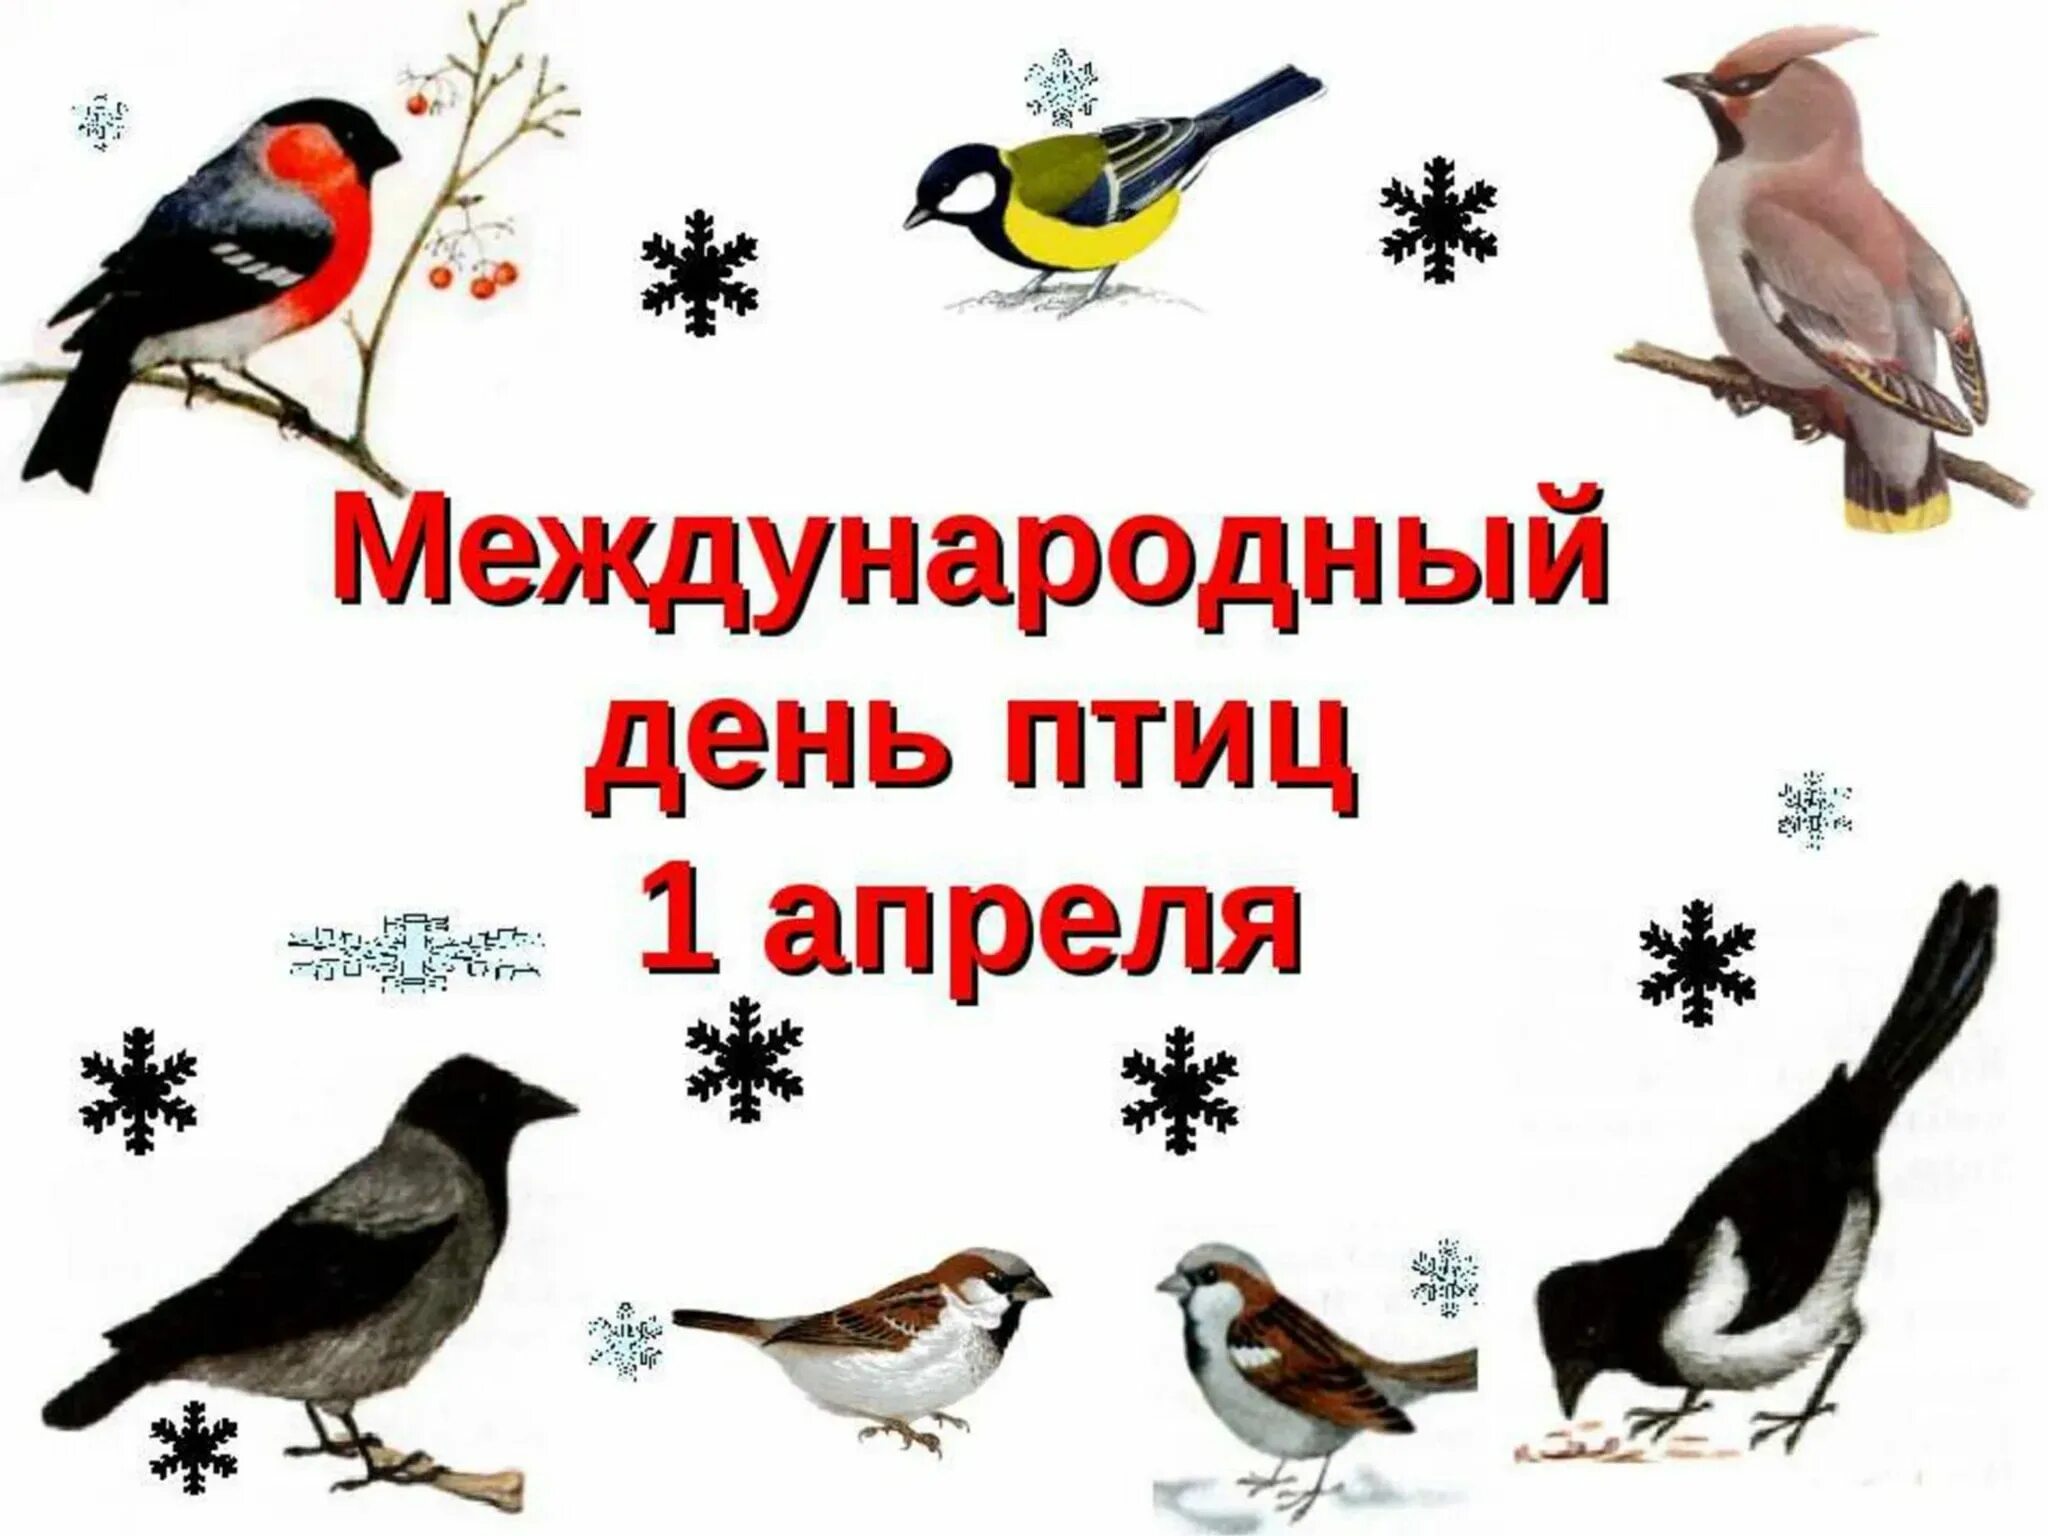 1 апреля международный день птиц картинки. Международный день птиц. 1 Апреля Международный день птиц. Междунаровныйденьптиц. Денптицу.